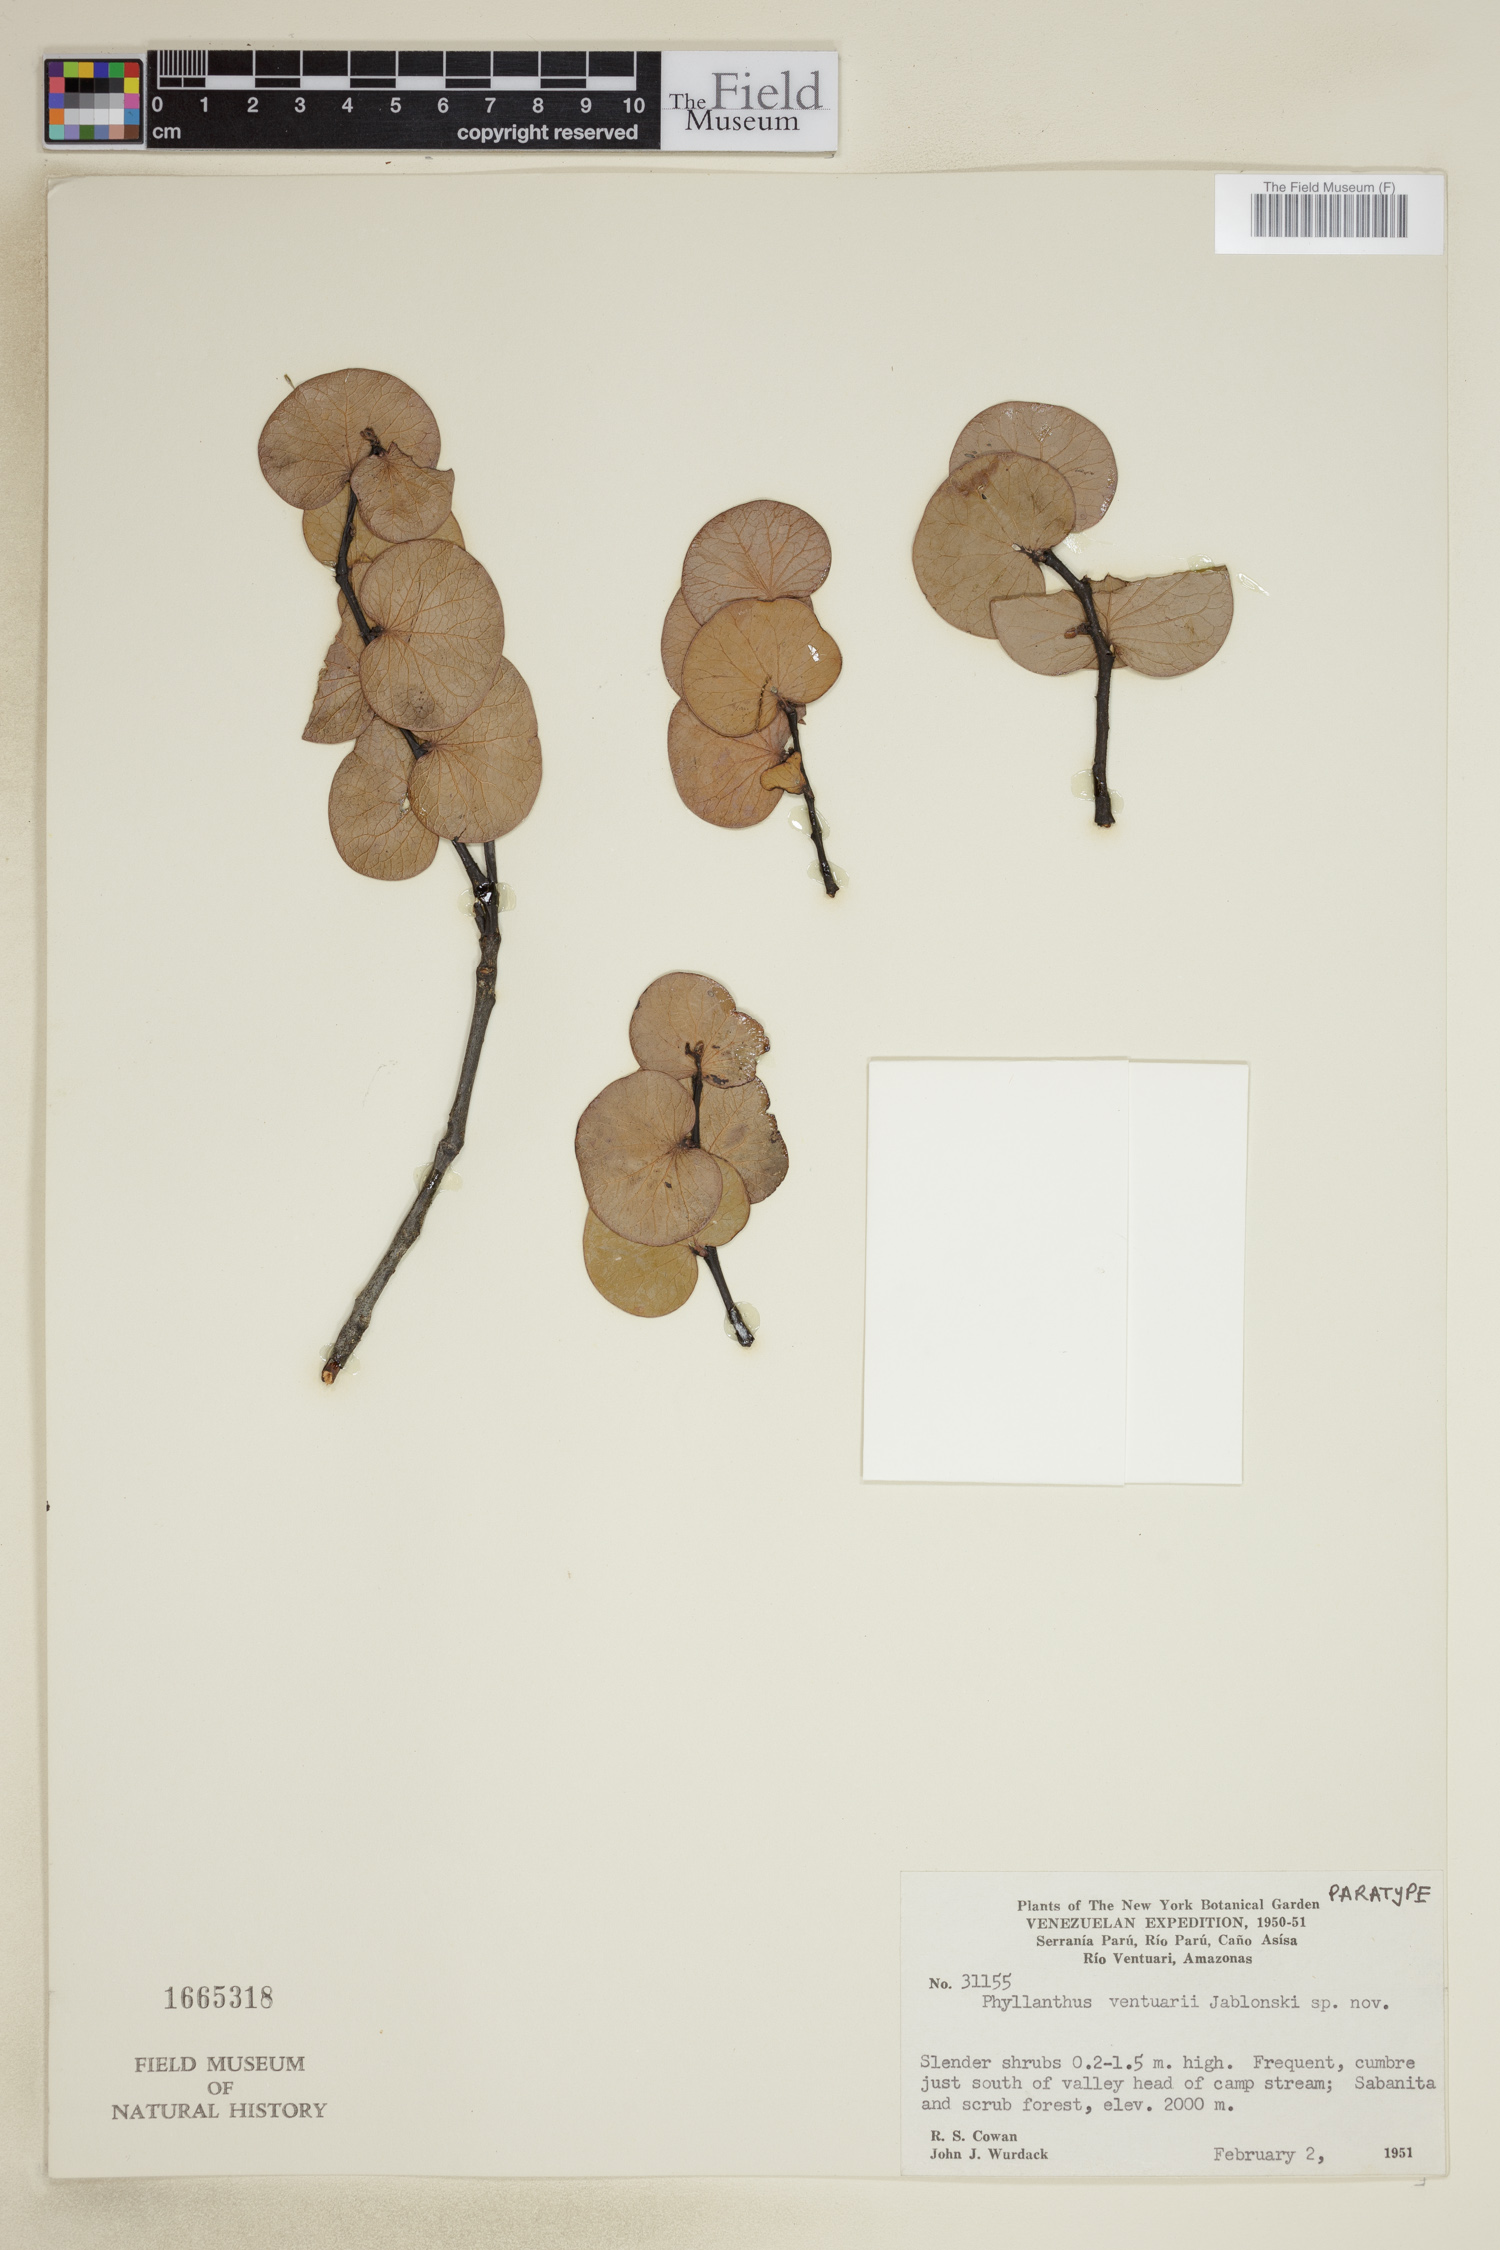 Phyllanthus ventuarii image